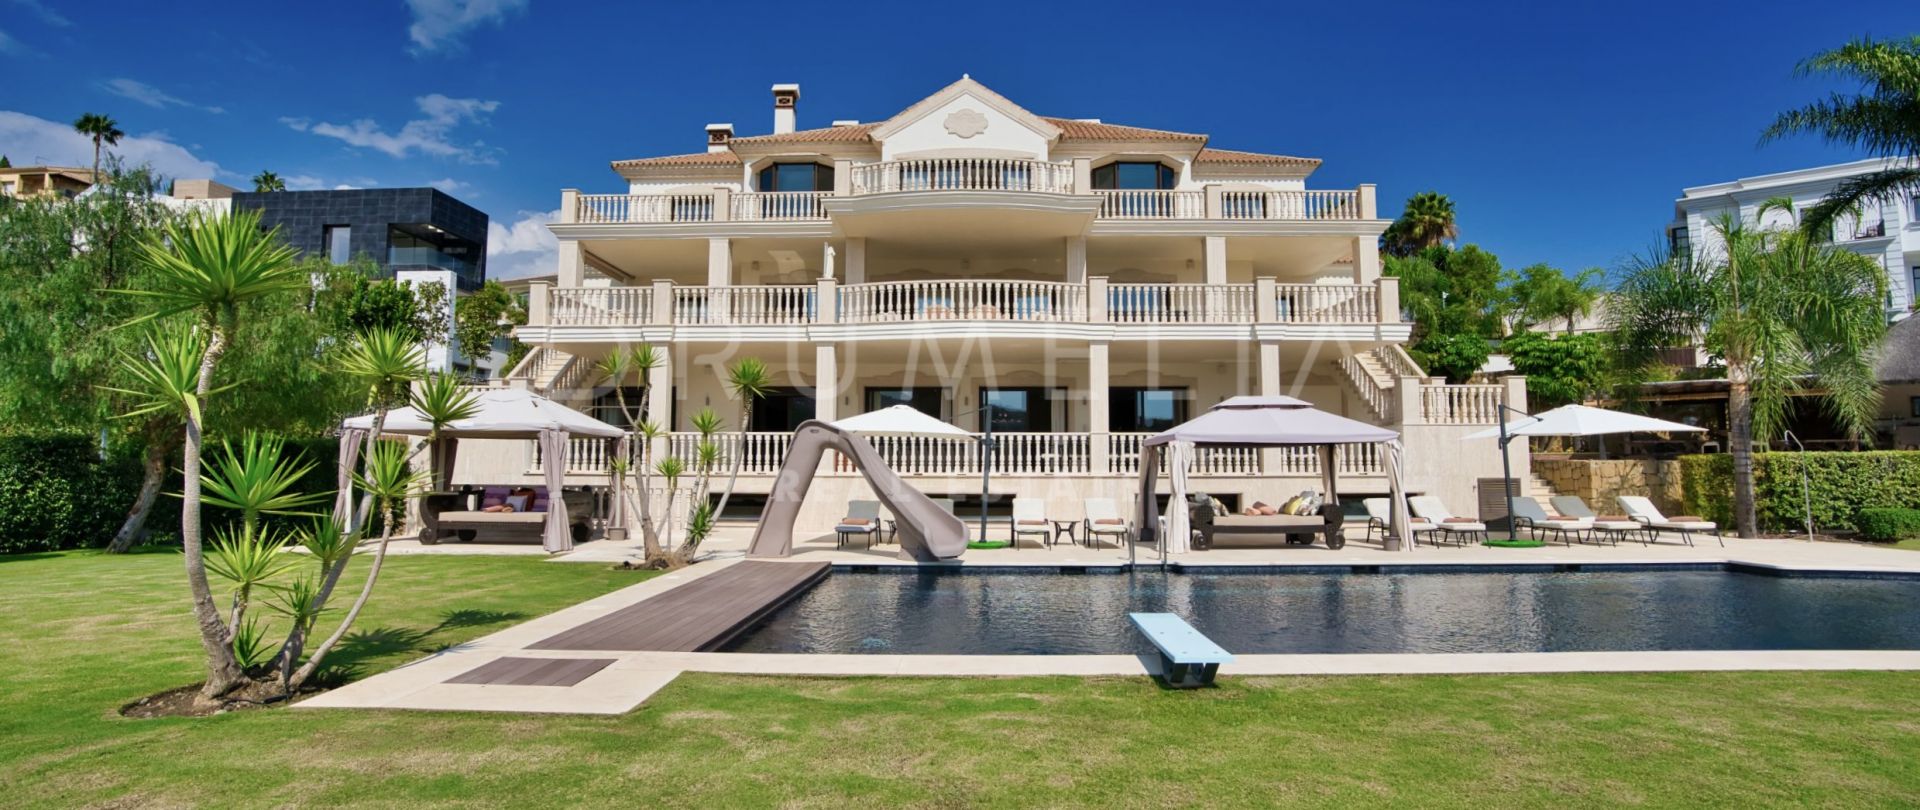 Breath-taking family grand villa with panoramic views and 2 pools in  beautiful La Alqueria, Benahavís